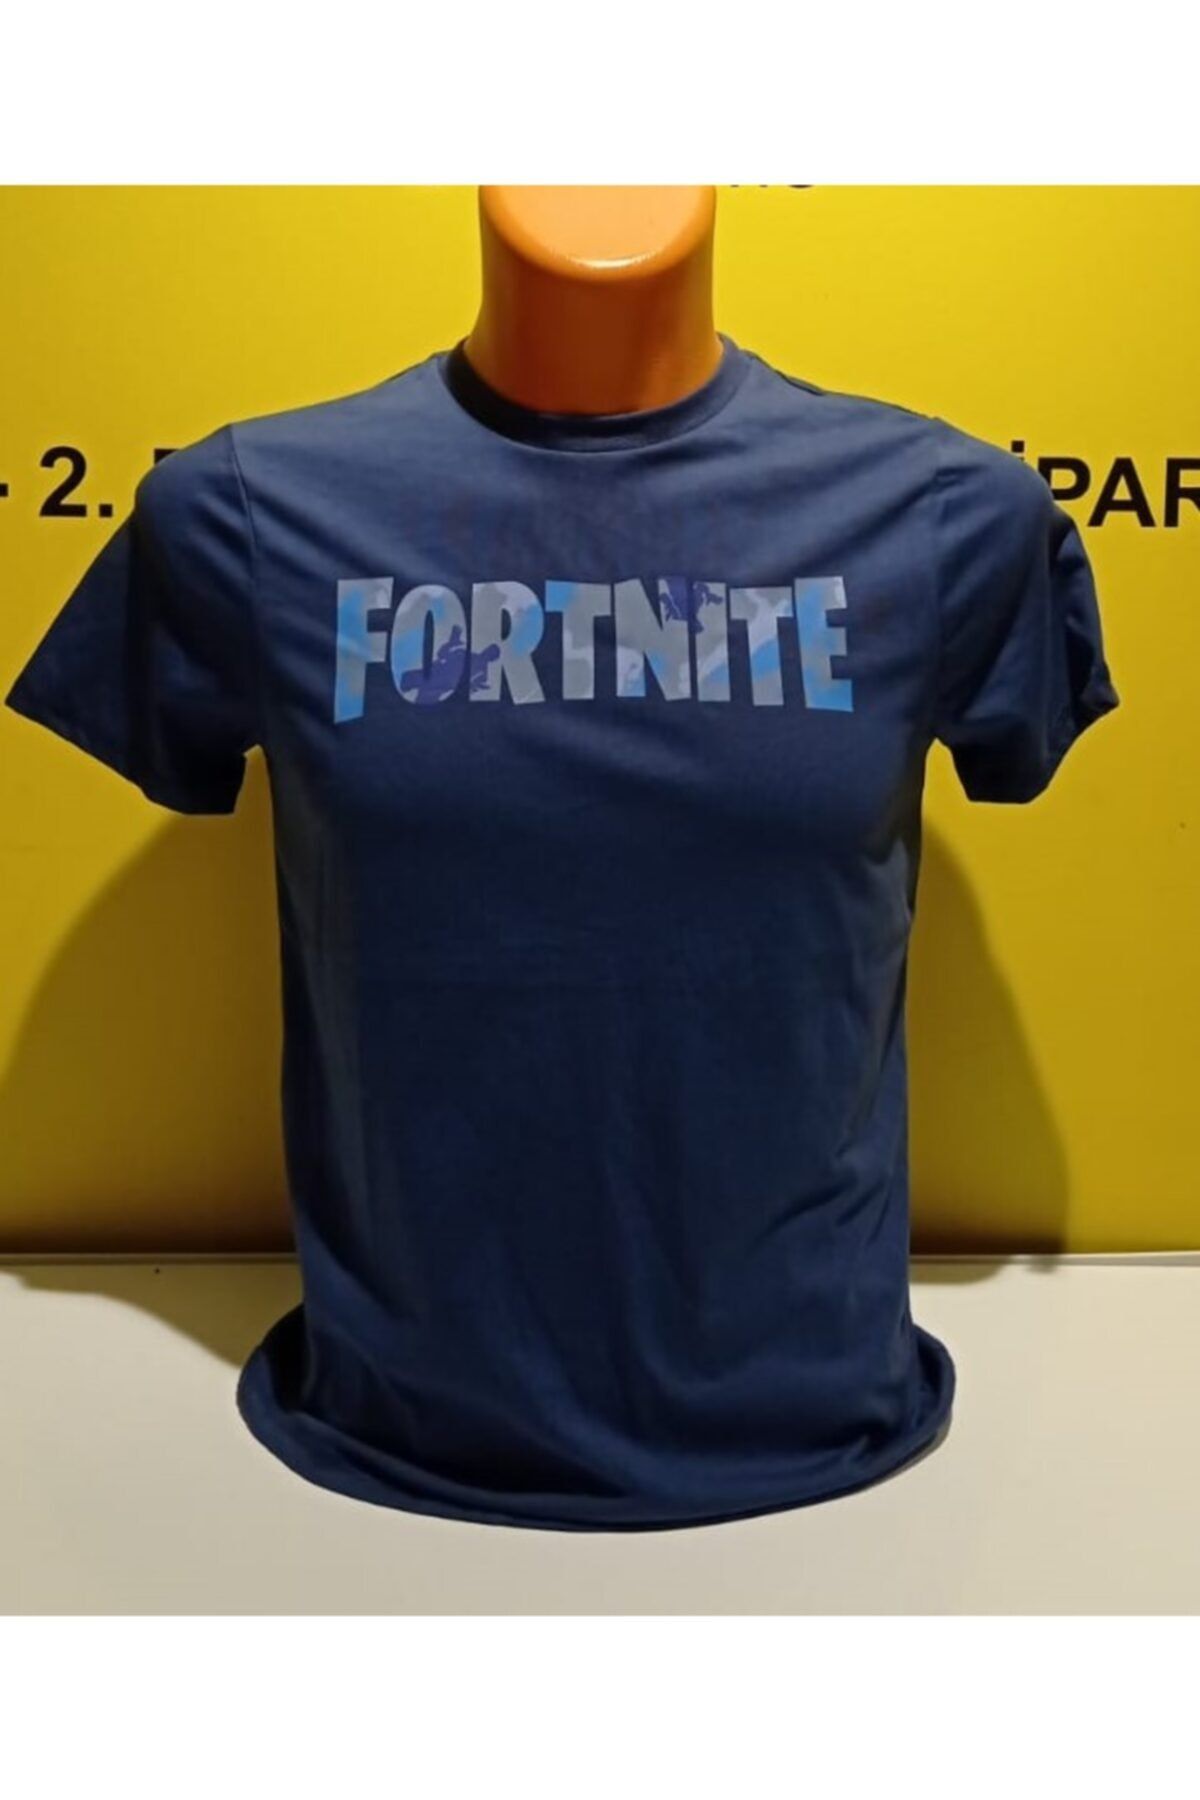 Overgame Fortnite Kamuflaj Baskılı Lacivert T-shirt Medium